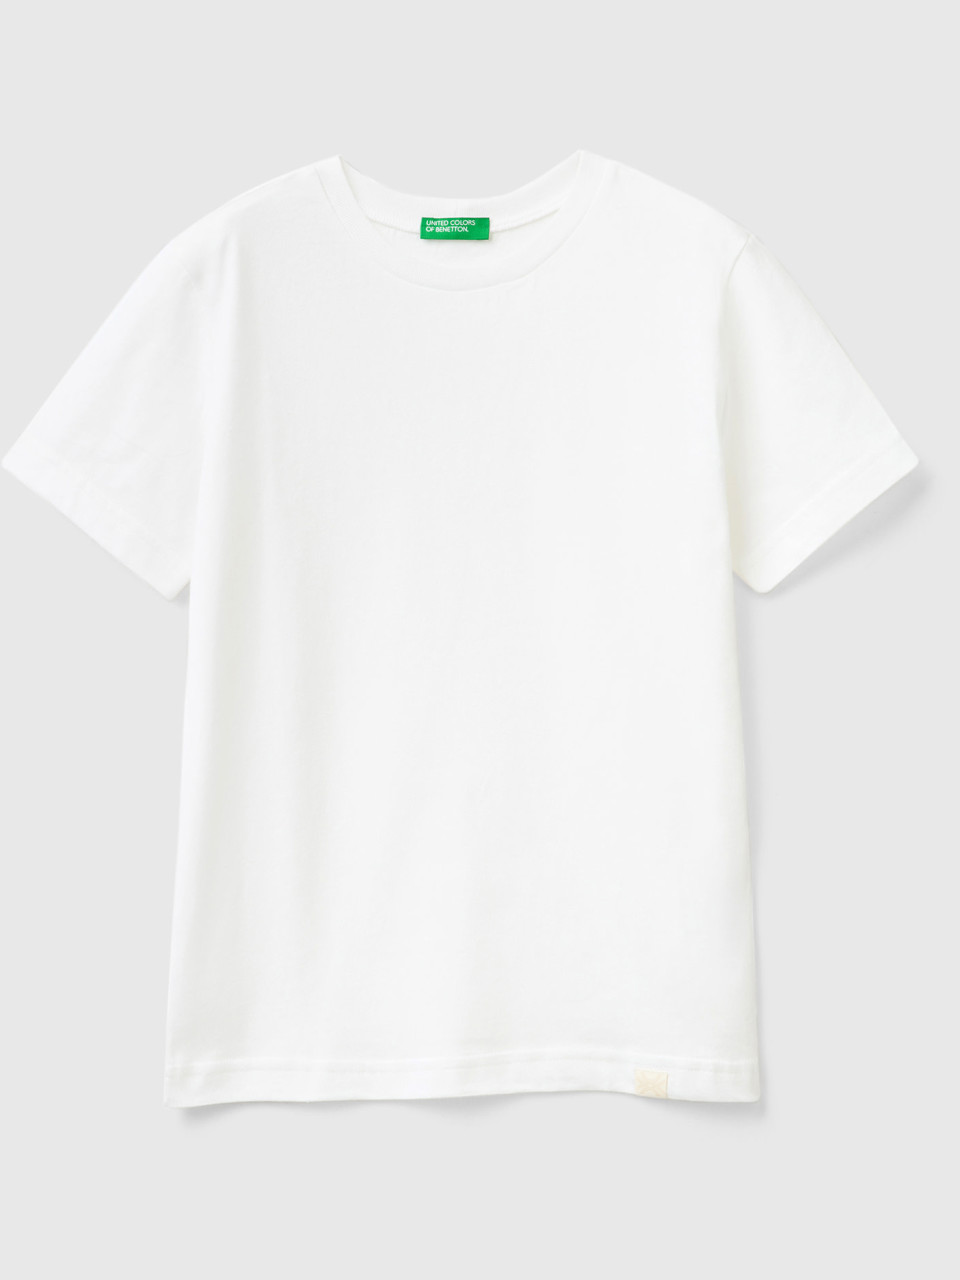 Benetton, Organic Cotton T-shirt, White, Kids